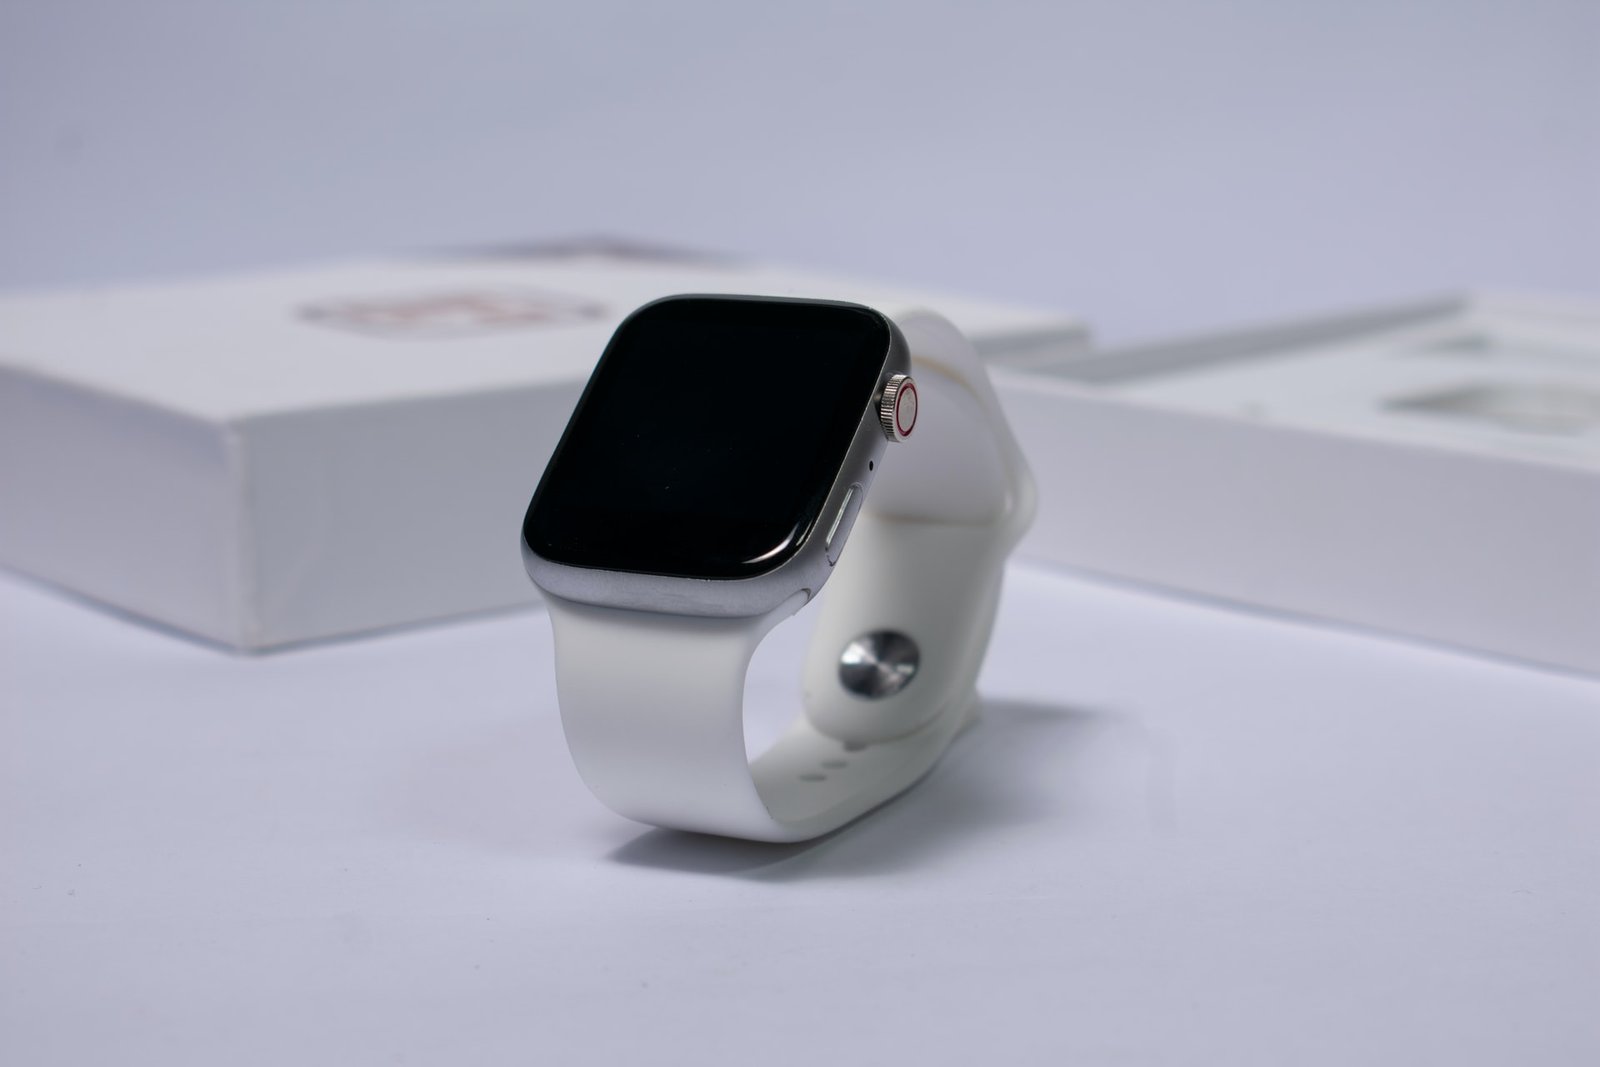 Apple Smartwatch With A Fingerprint Sensor